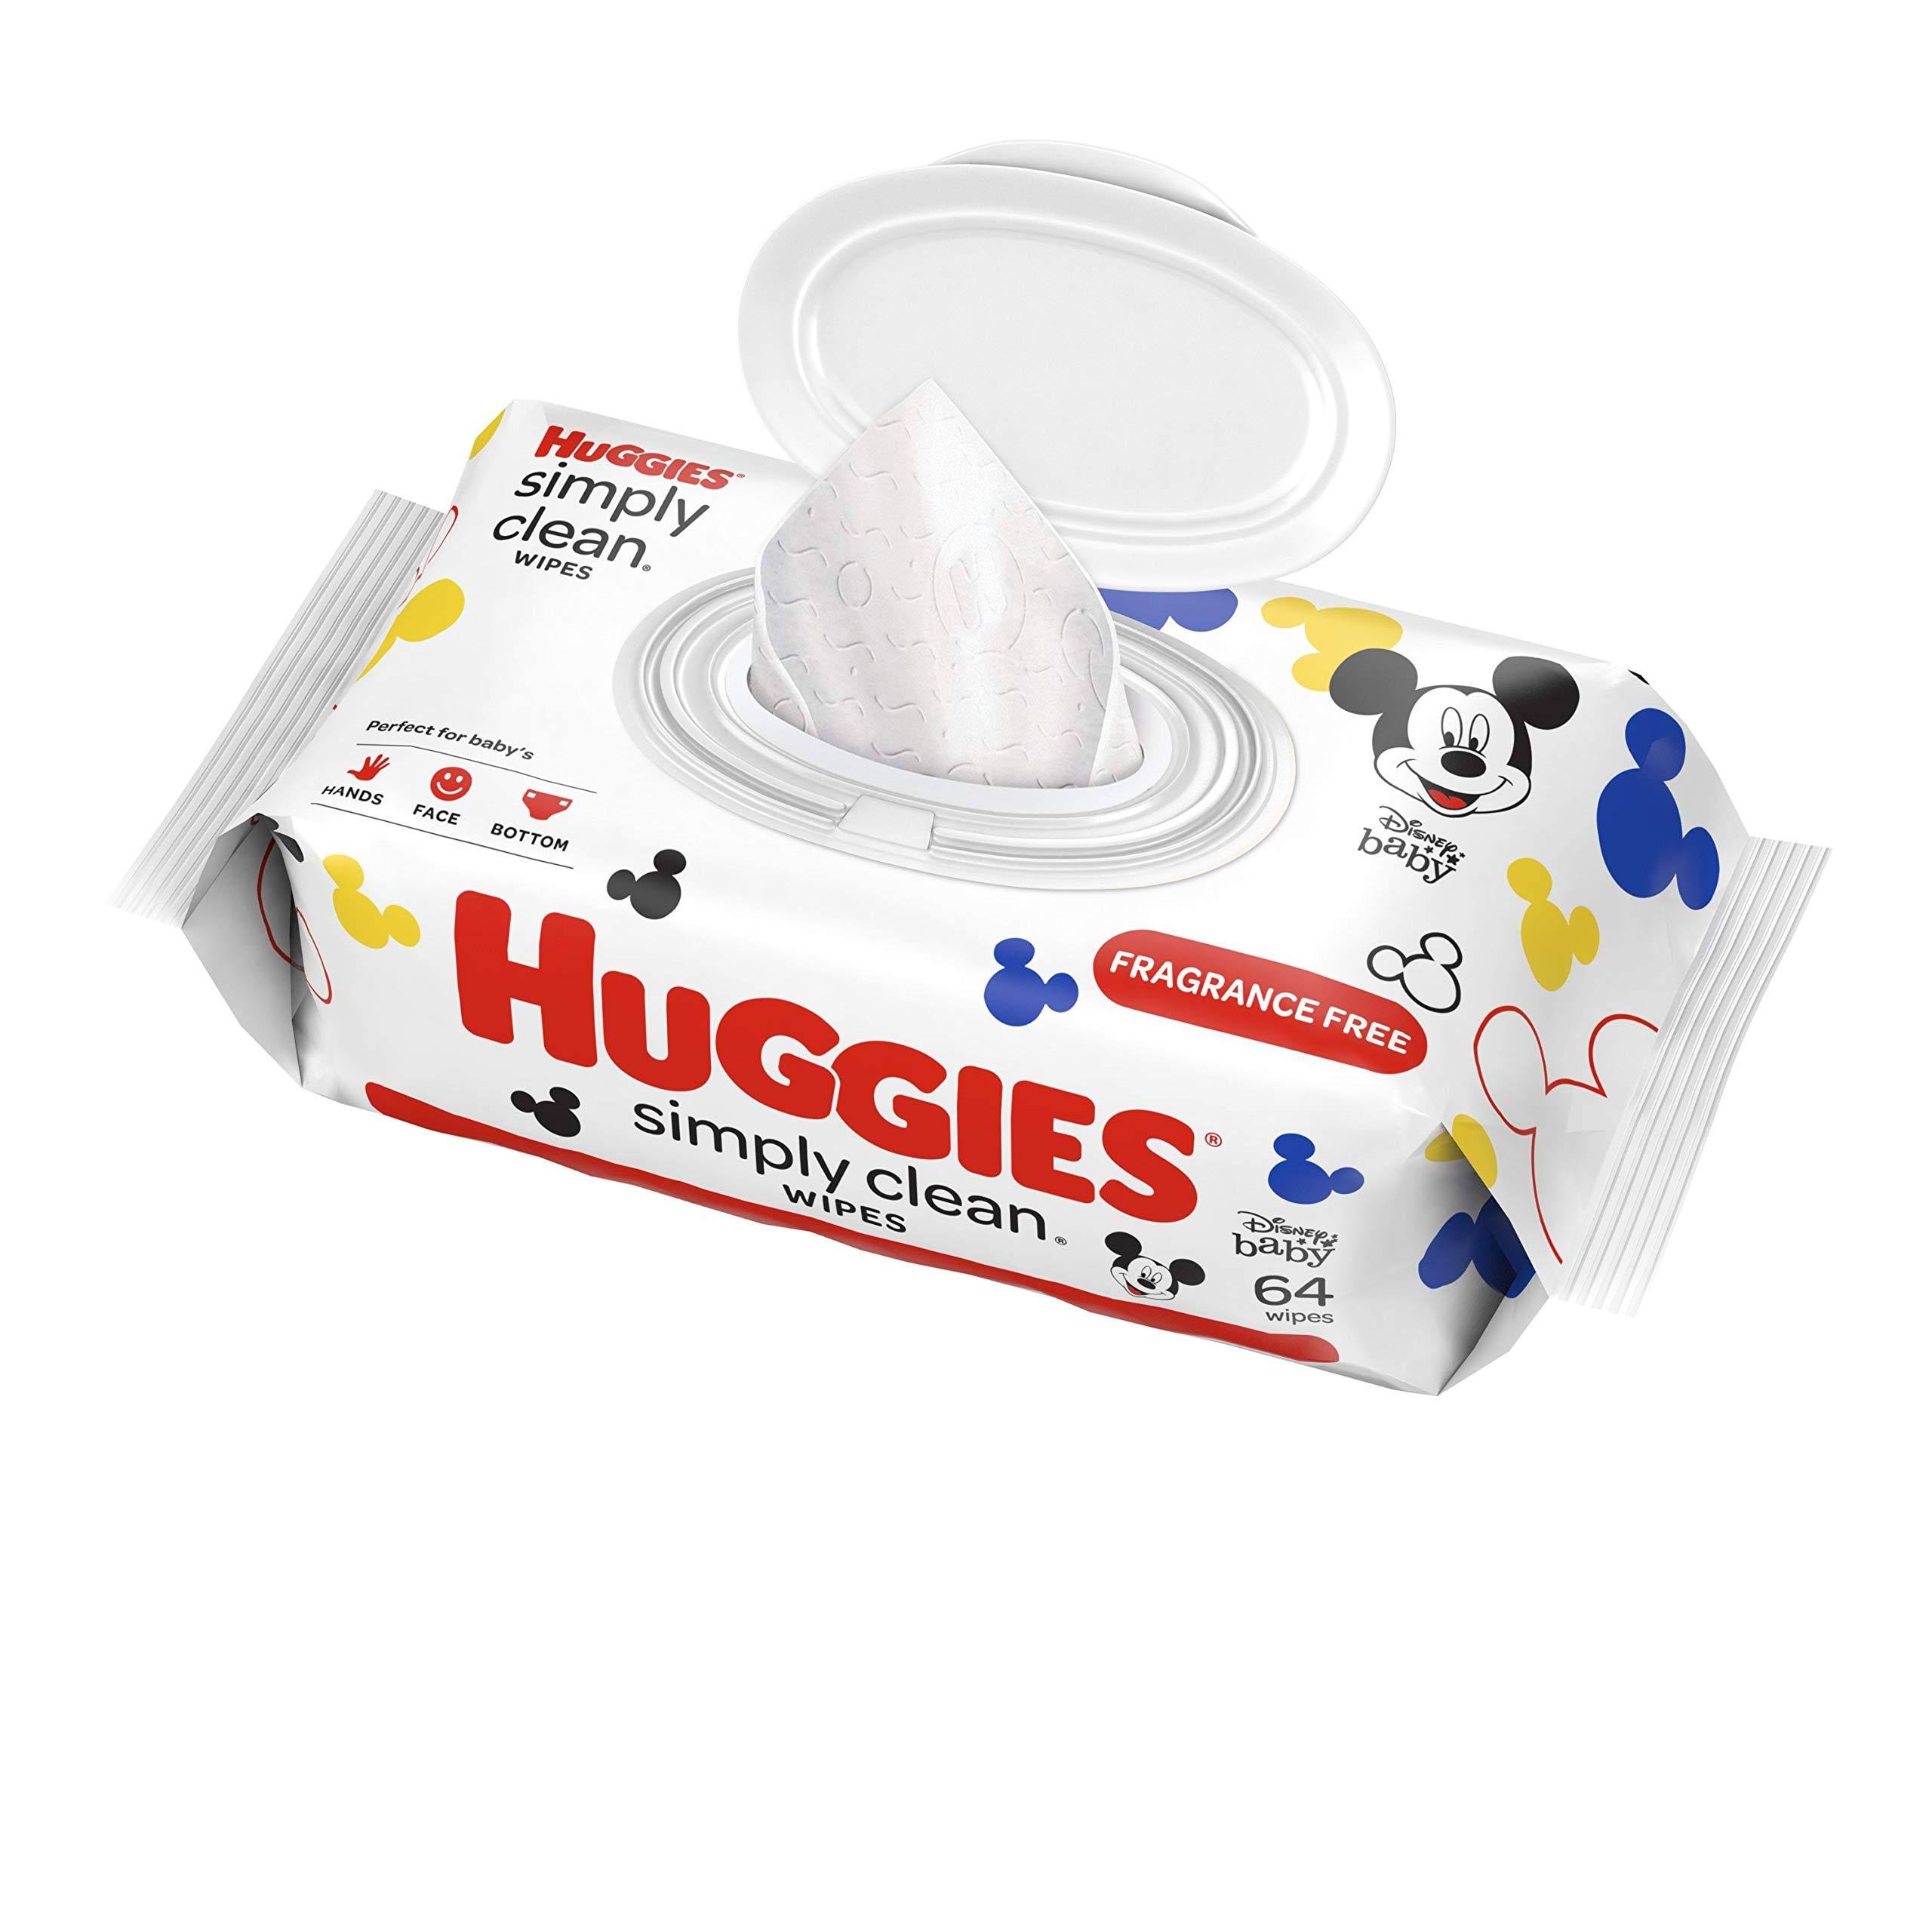 Huggies Simply Clean, Baby Wipes, 1 Pack 64 Count